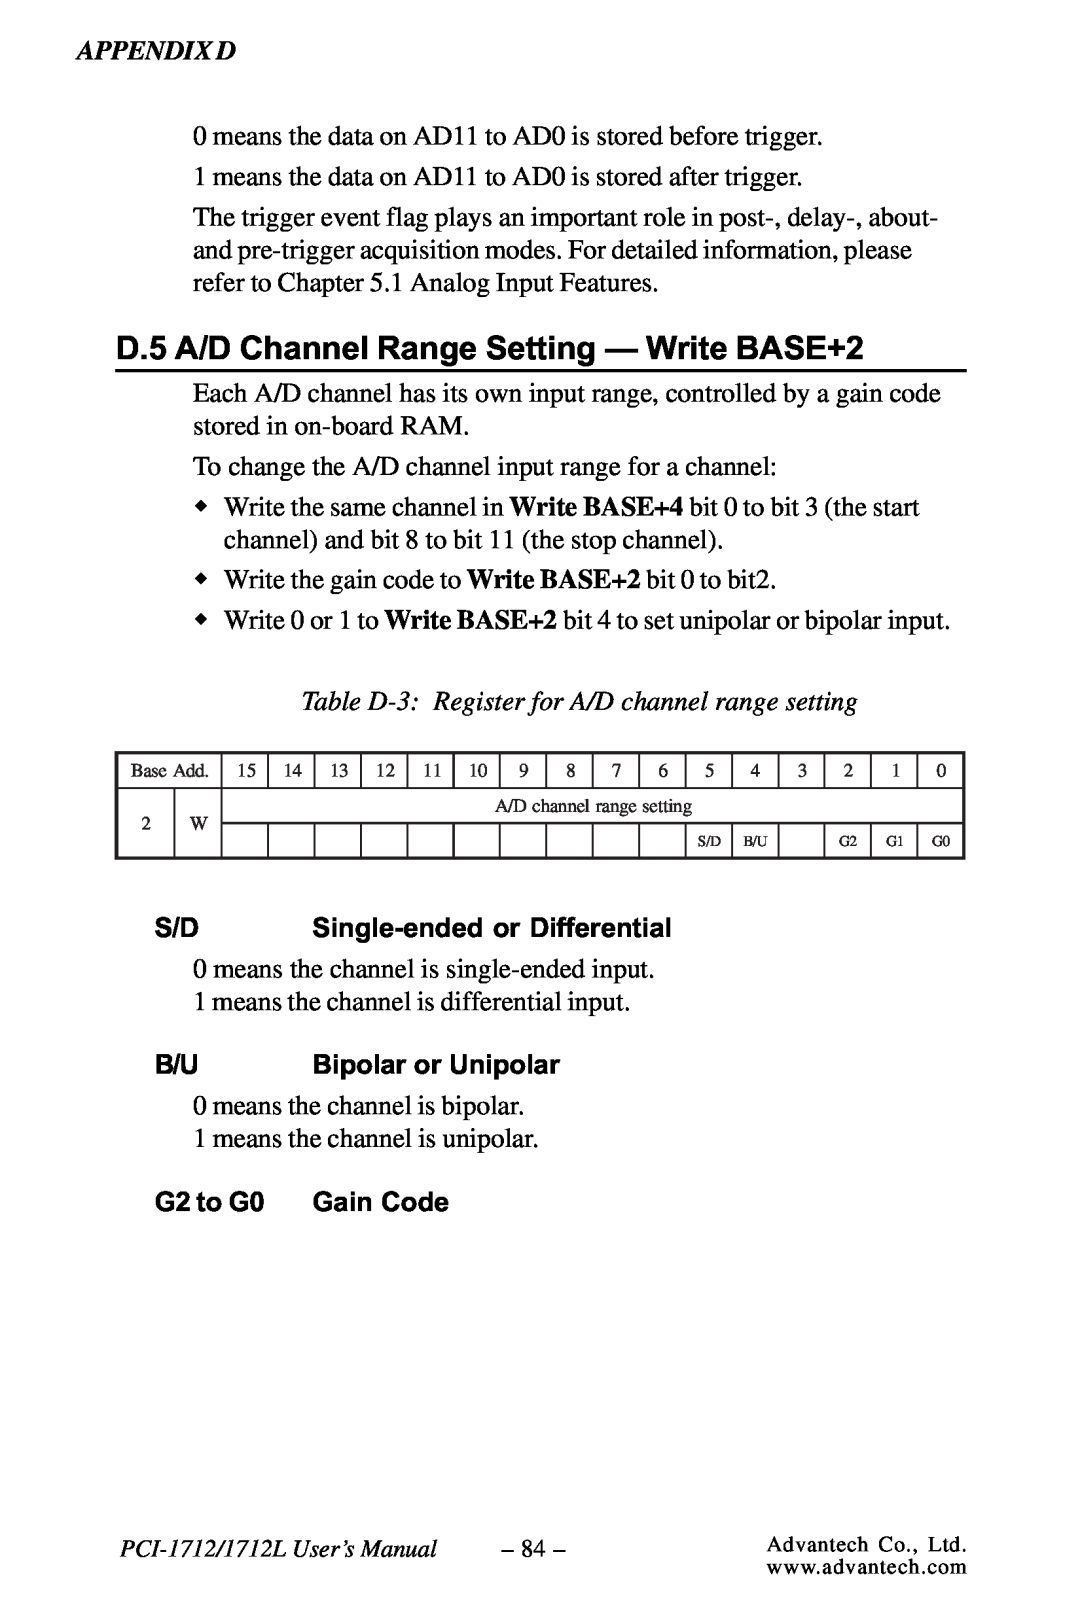 Konica Minolta PCI-1712 D.5 A/D Channel Range Setting - Write BASE+2, Table D-3 Register for A/D channel range setting 